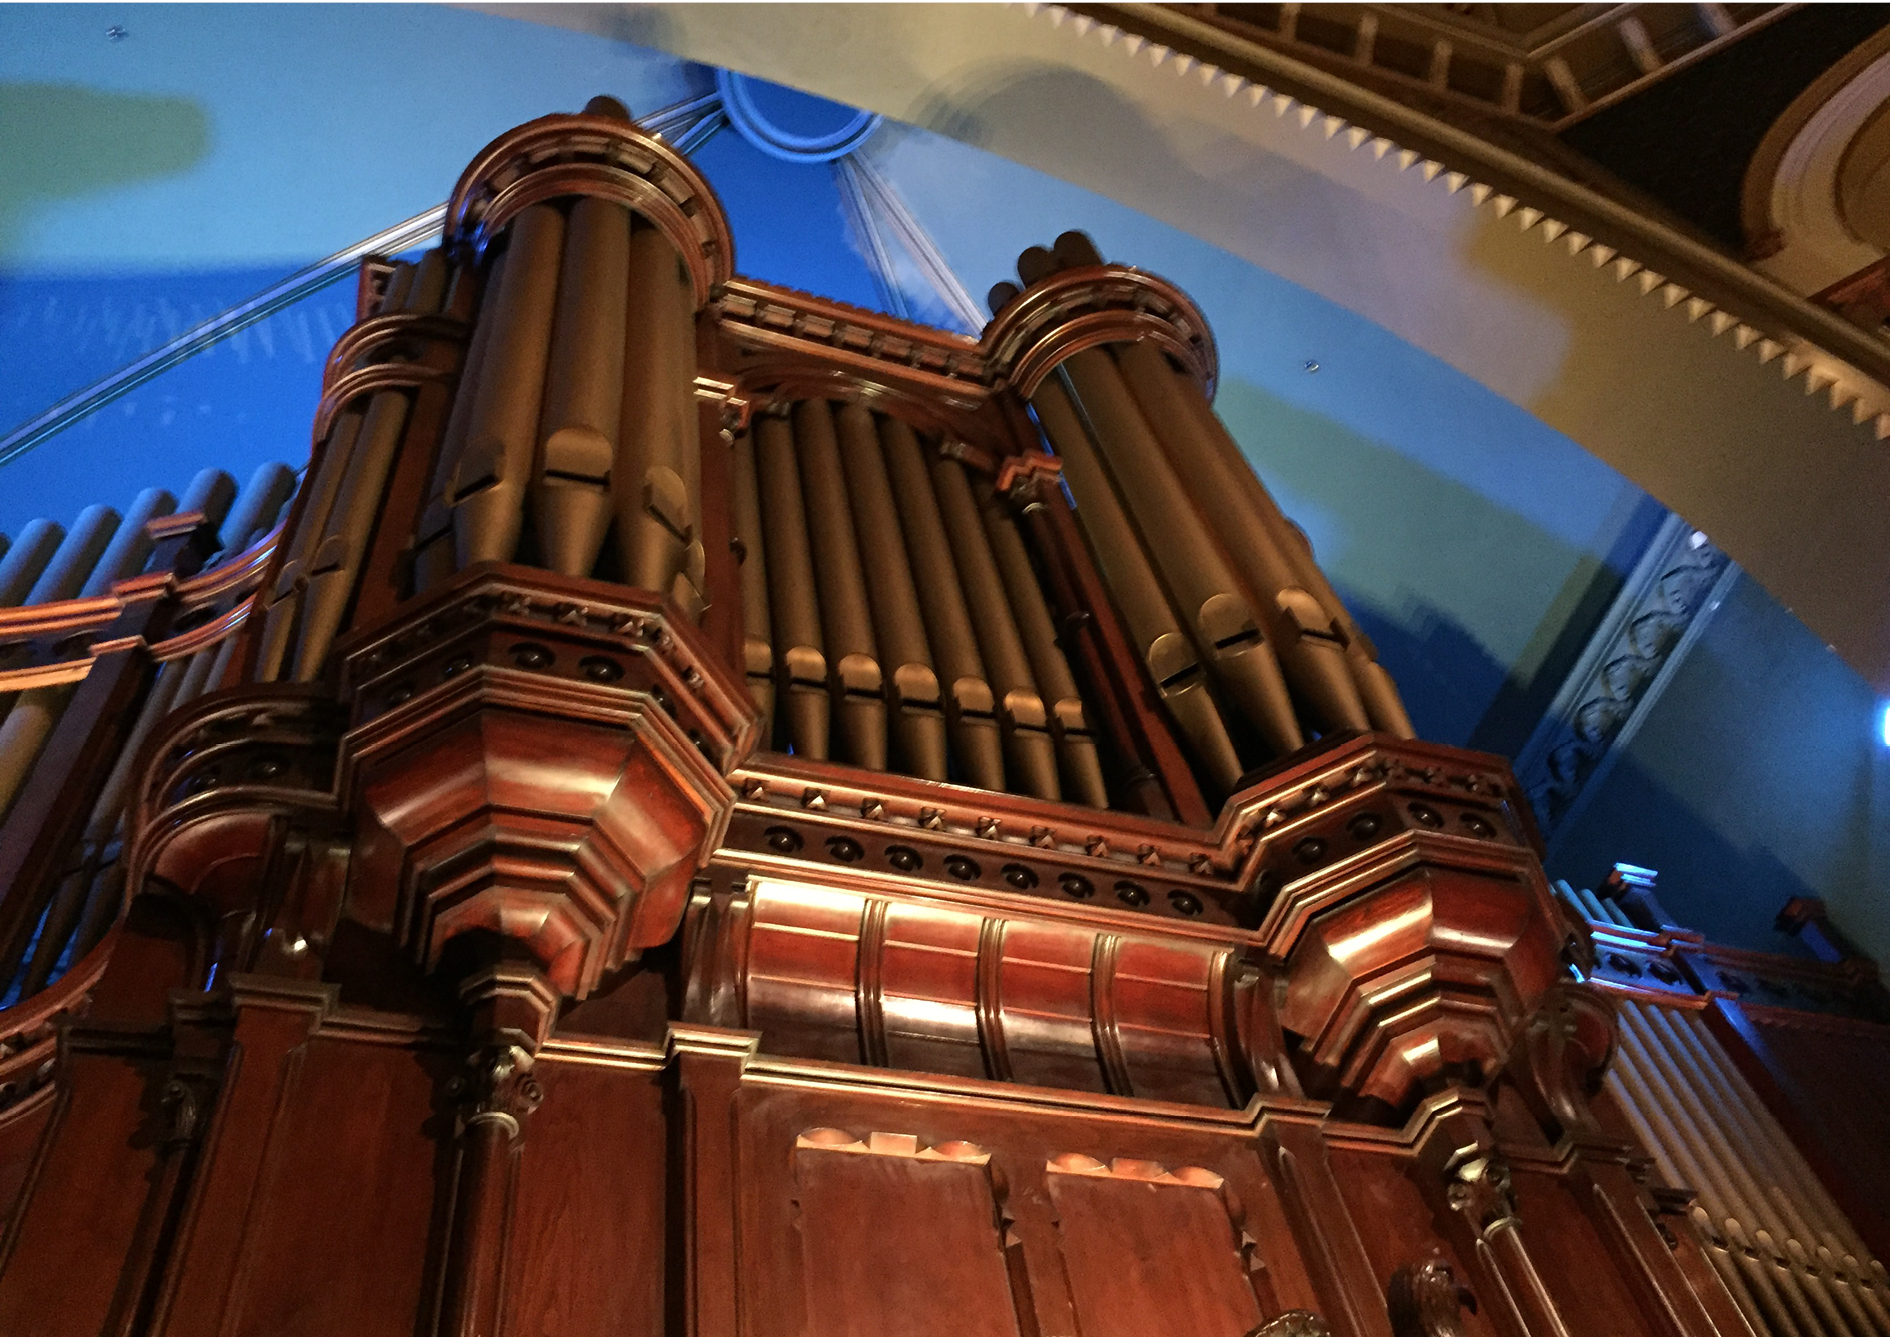 Looking up at the Grand Organ Pipes at St Michael's Uniting Church